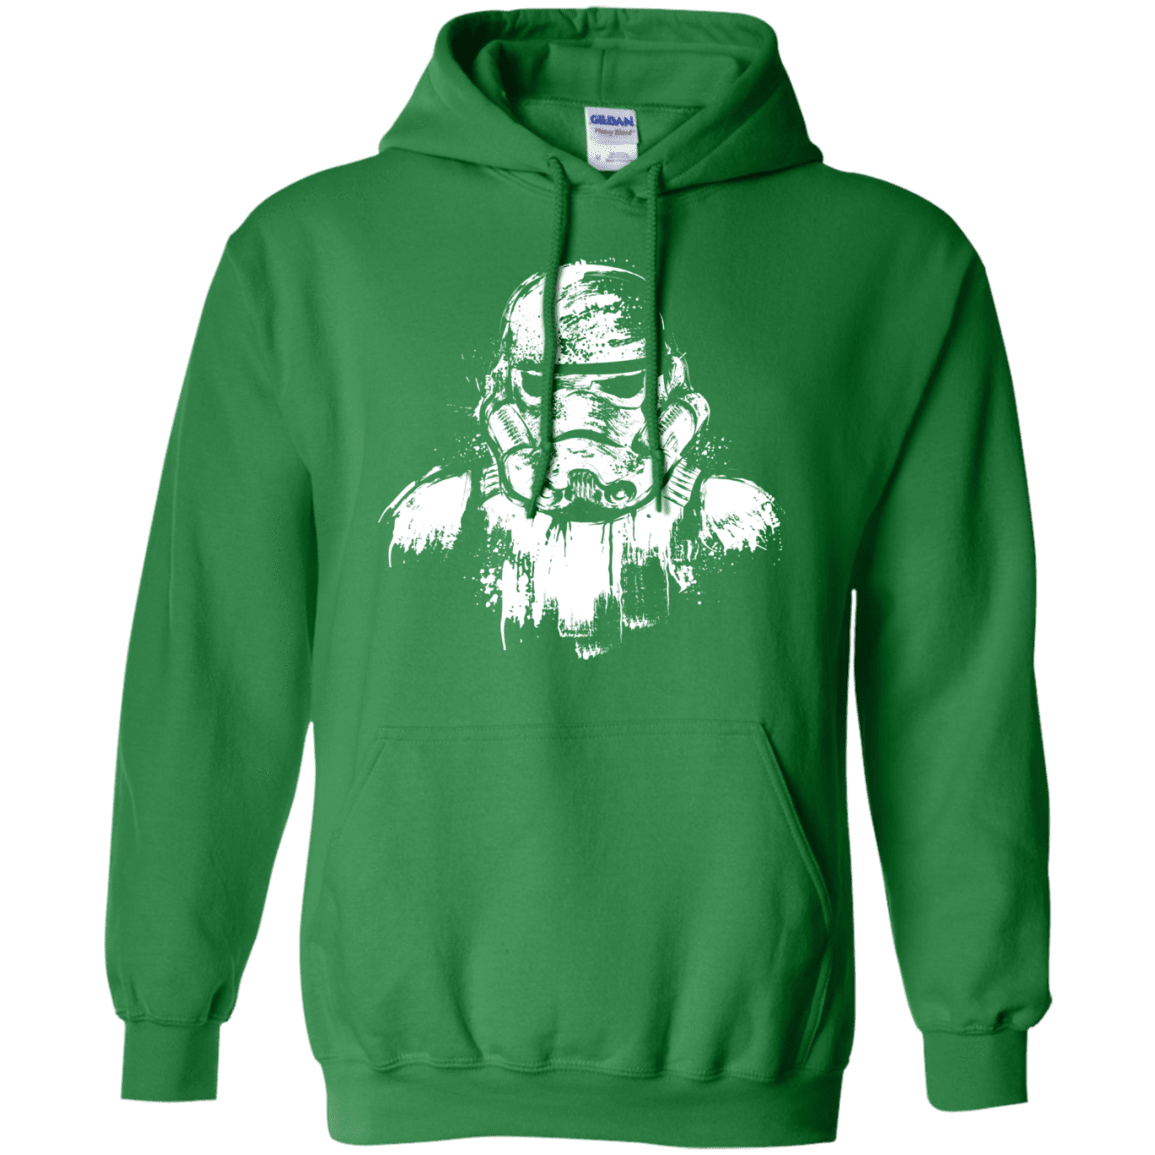 Sweatshirts Irish Green / Small STORMTROOPER ARMOR Pullover Hoodie